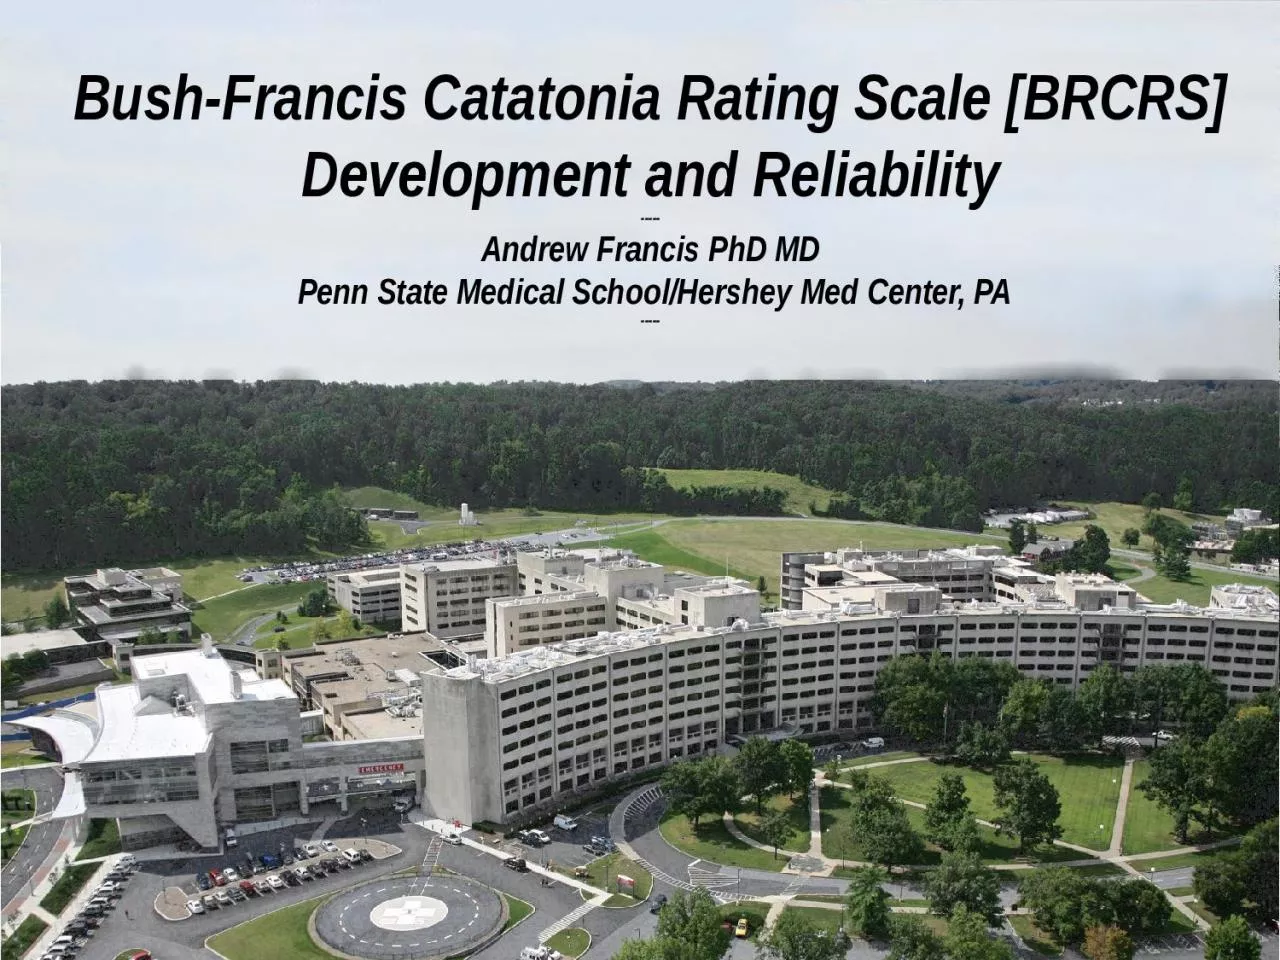 Bush-Francis Catatonia Rating Scale [BRCRS]